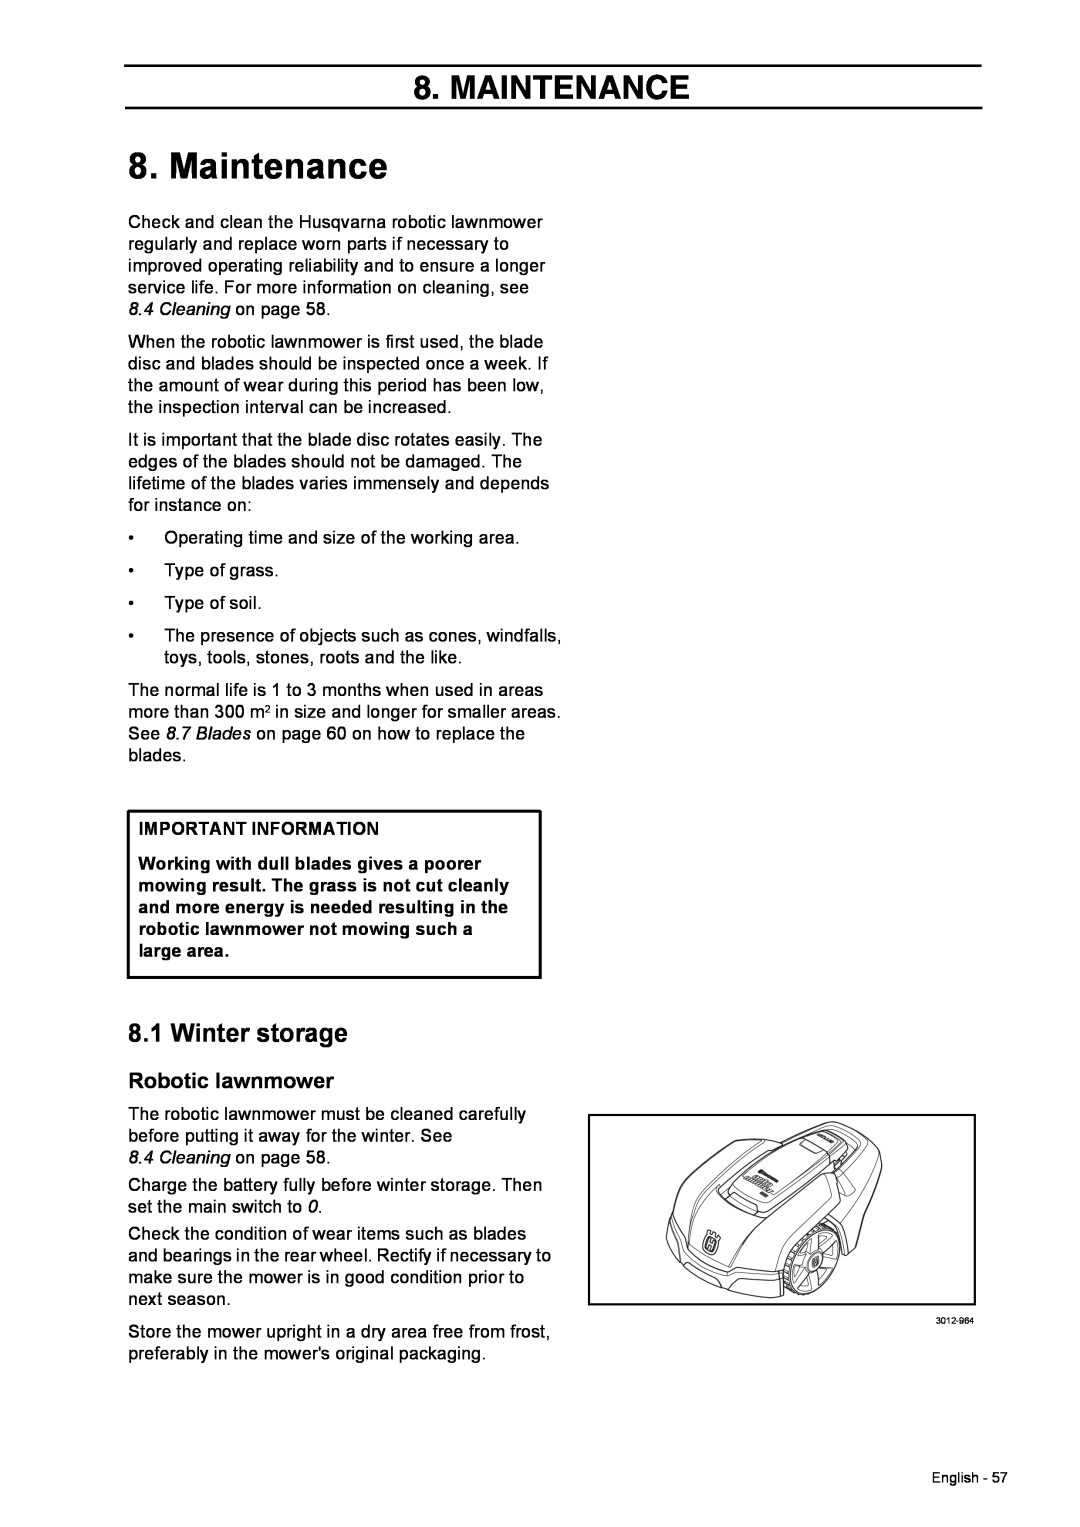 Husqvarna 308 manual Maintenance, Winter storage, Robotic lawnmower, Important Information 